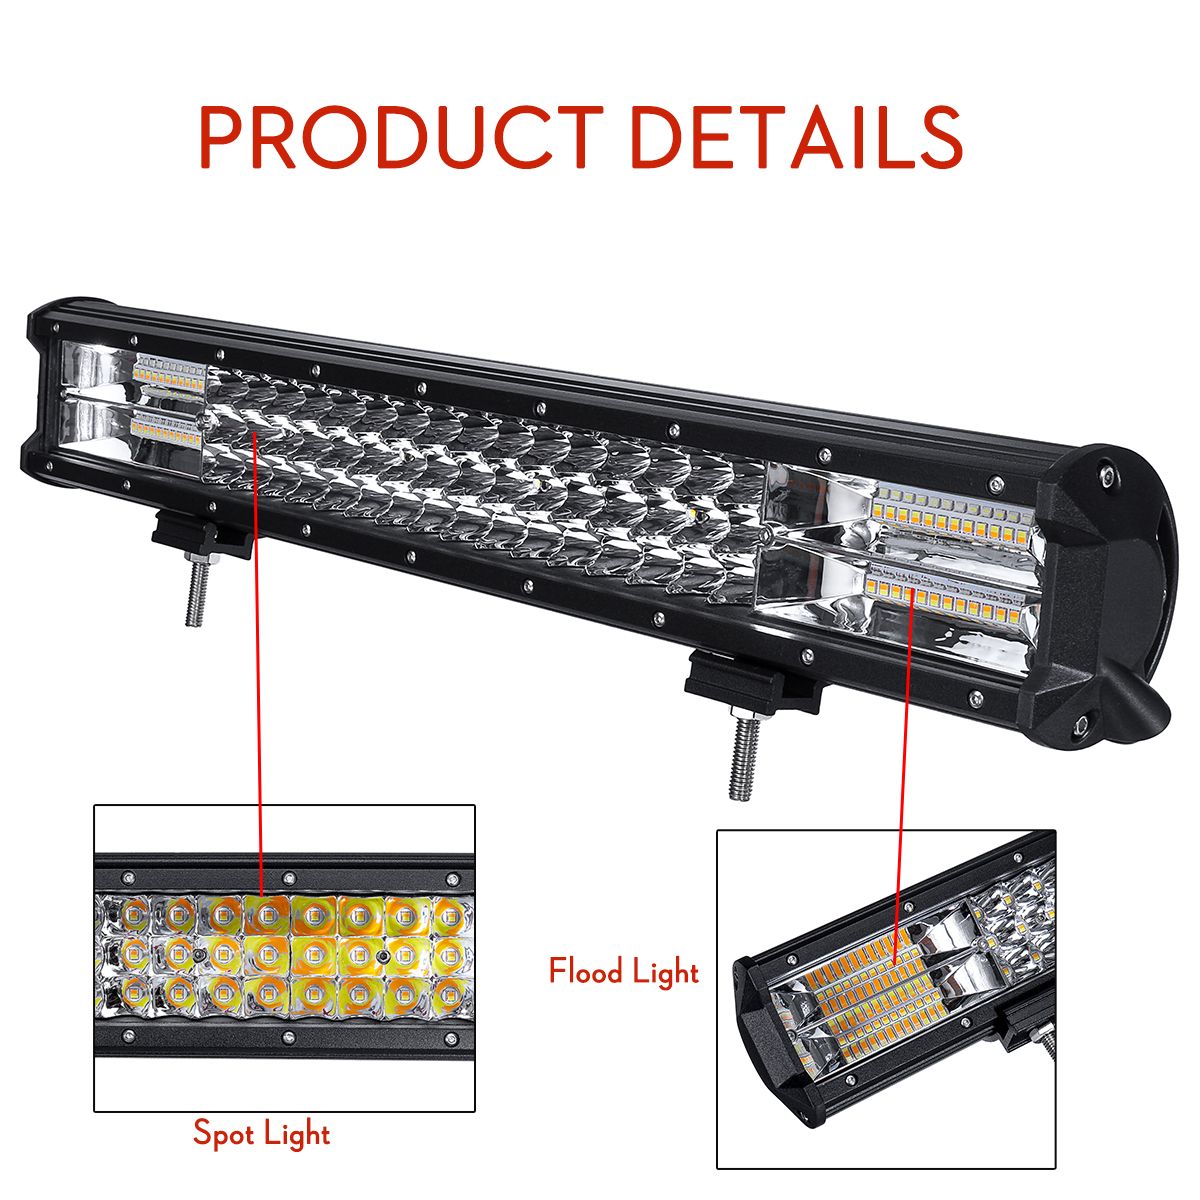 20Inch-288W-LED-Work-Light-Bar-Combo-Beam-Driving-Lamp-5-Flash-Modes-WhiteAmber-1030V-for-Off-Road-S-1609808